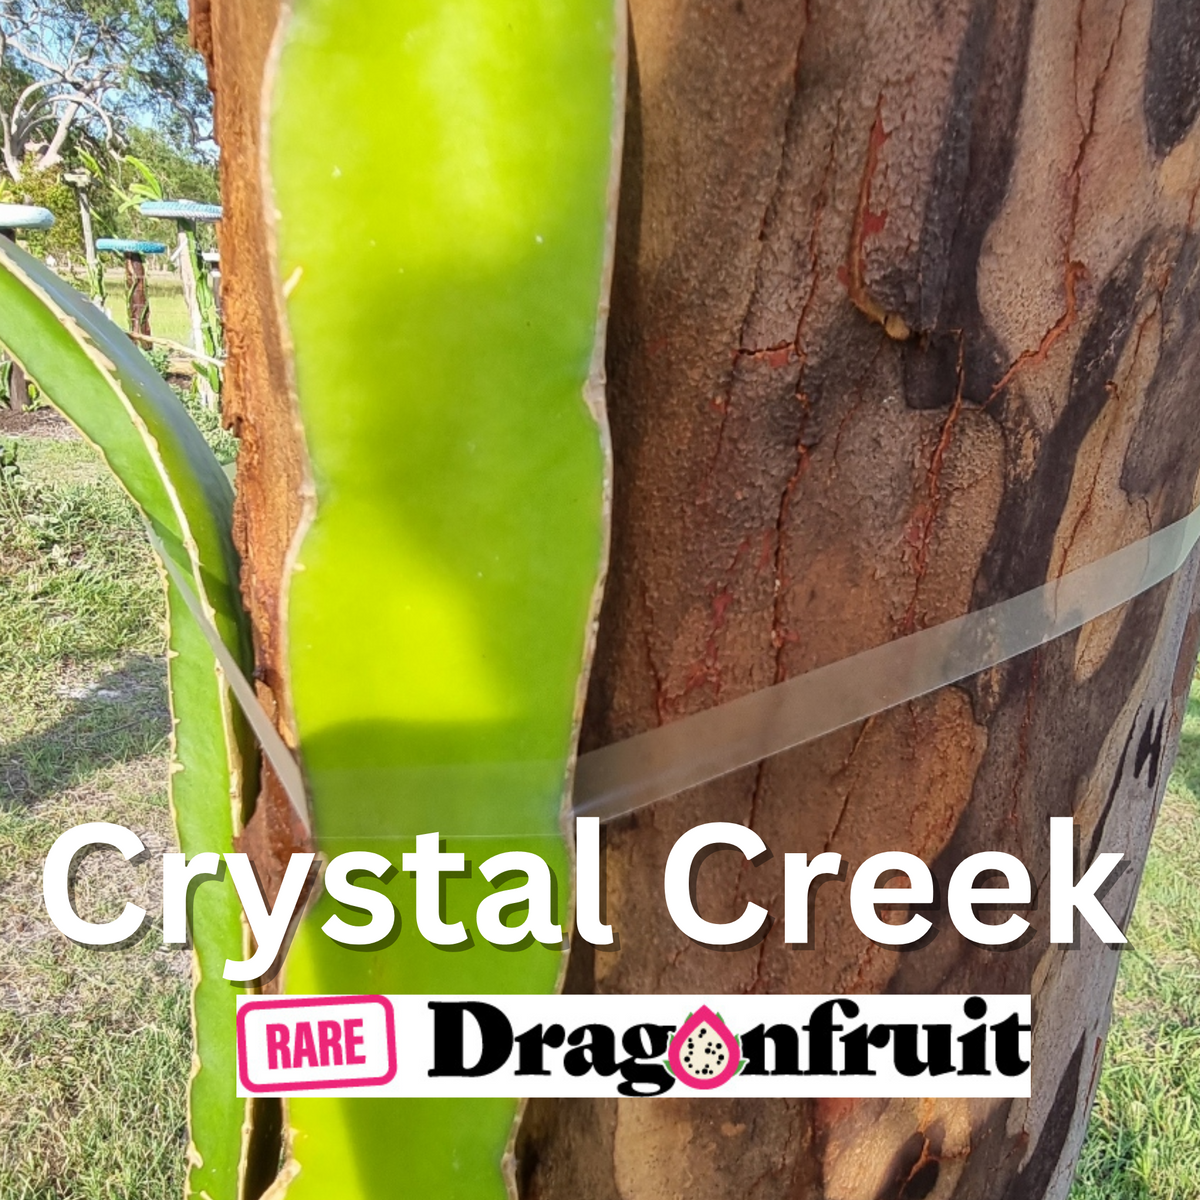 Crystal Creek Dragon Fruit